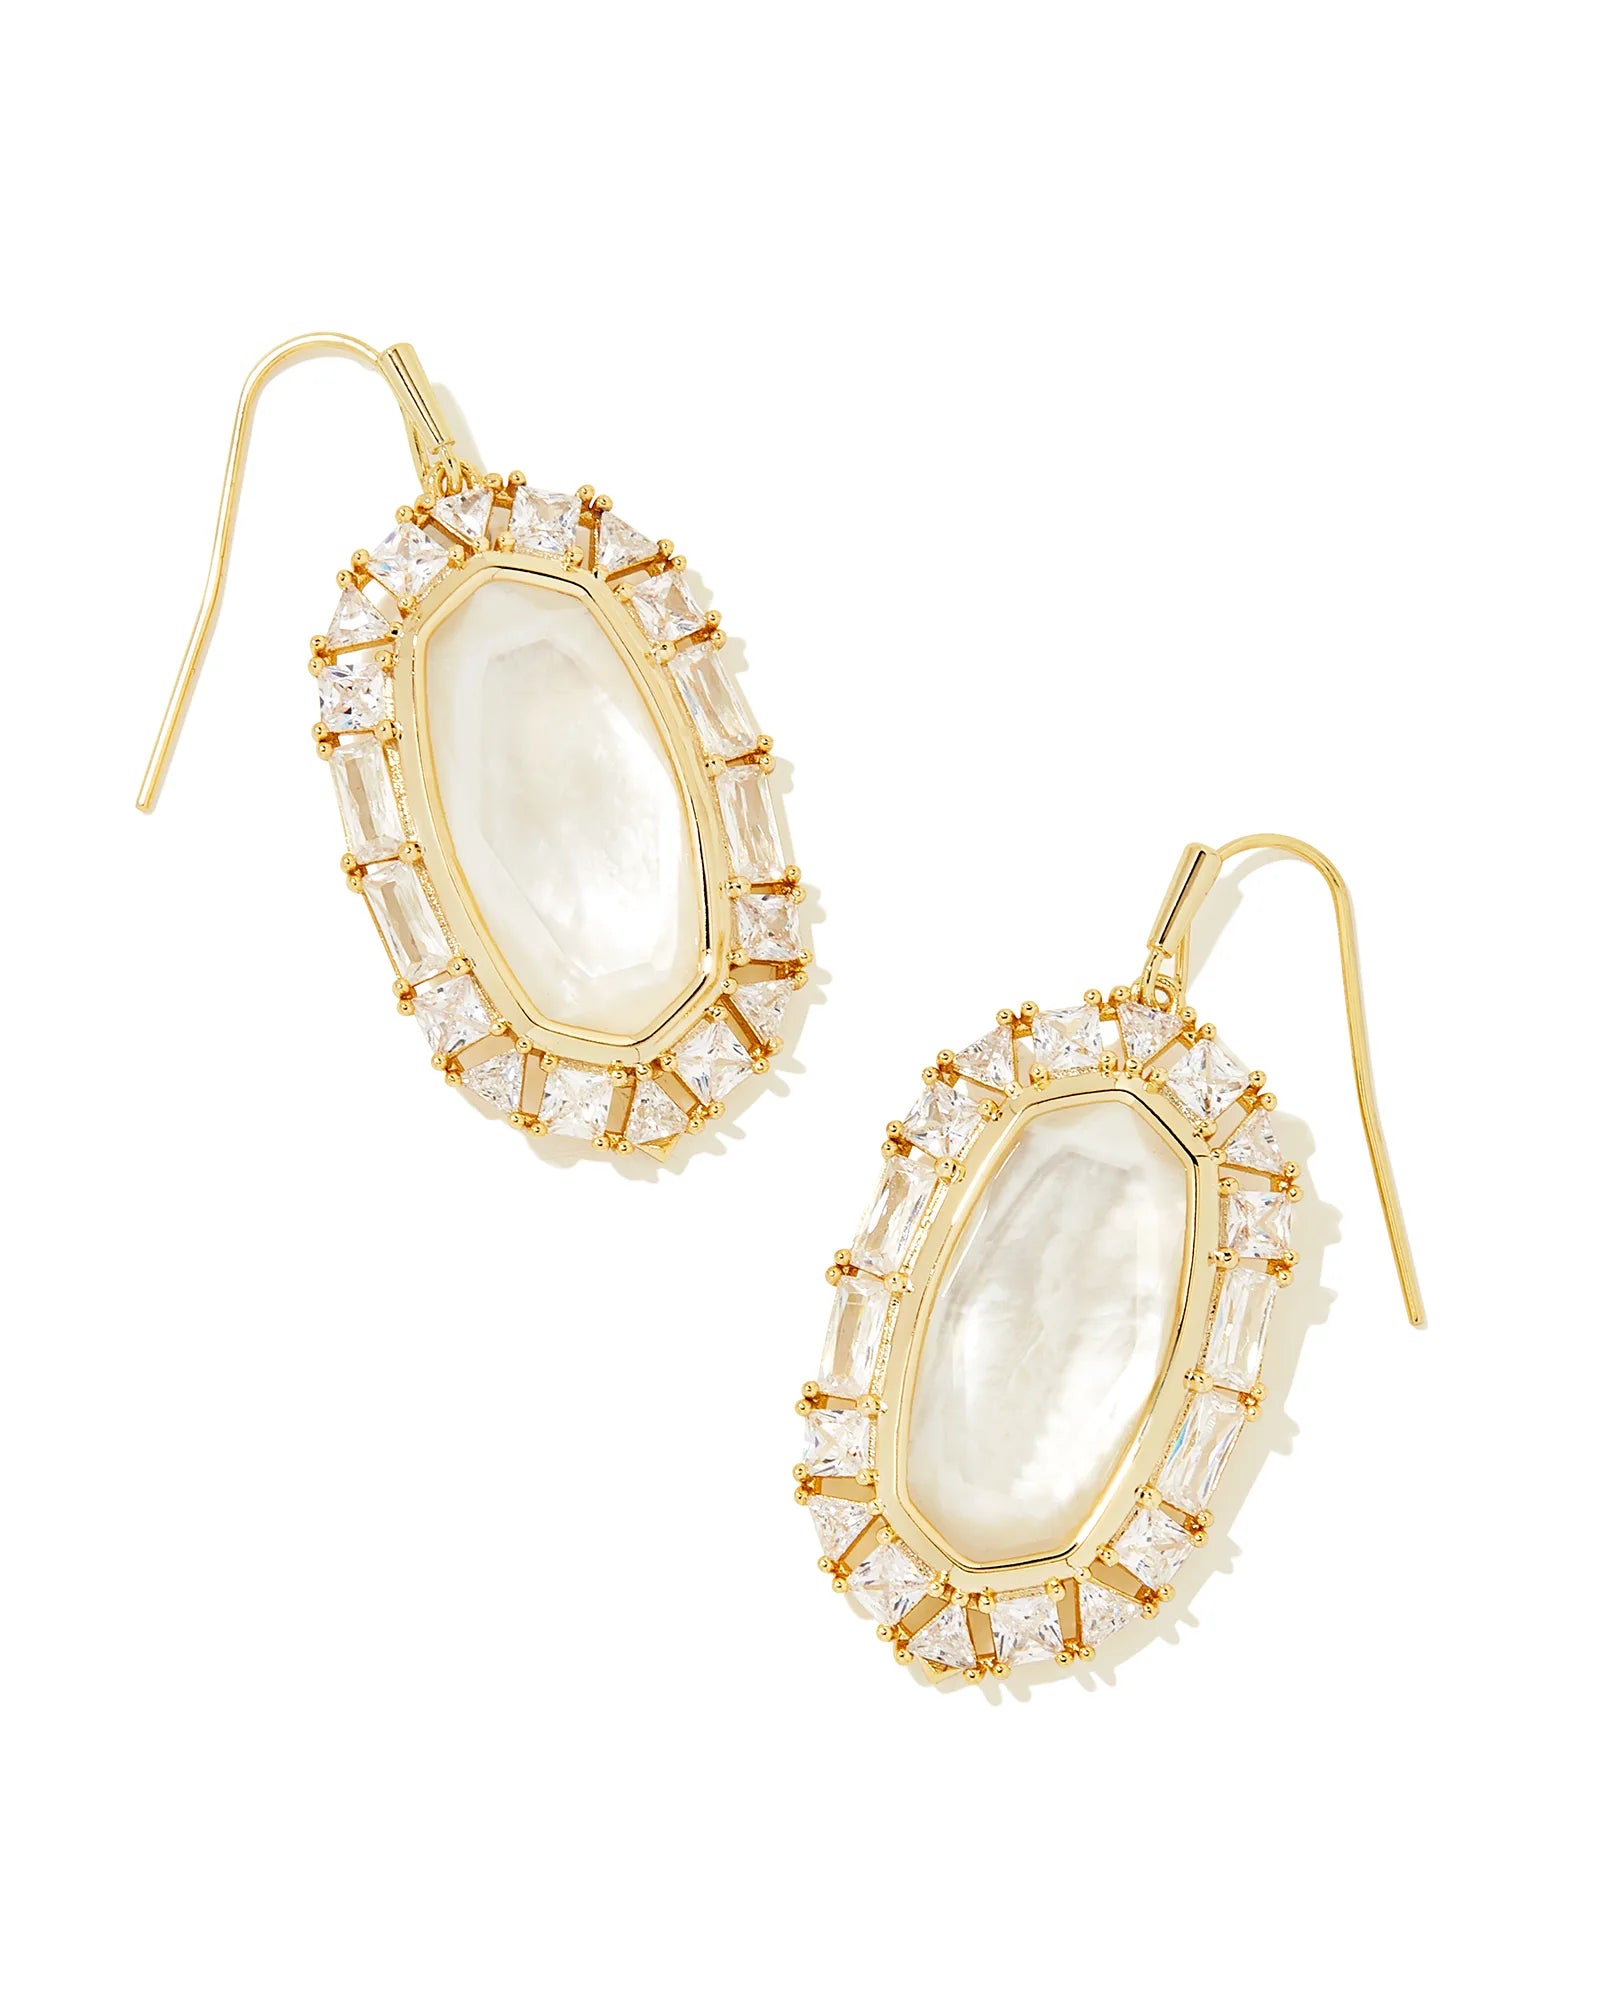 KENDRA SCOTT- Elle Gold Crystal Frame Drop Earrings in Ivory Mother of Pearl